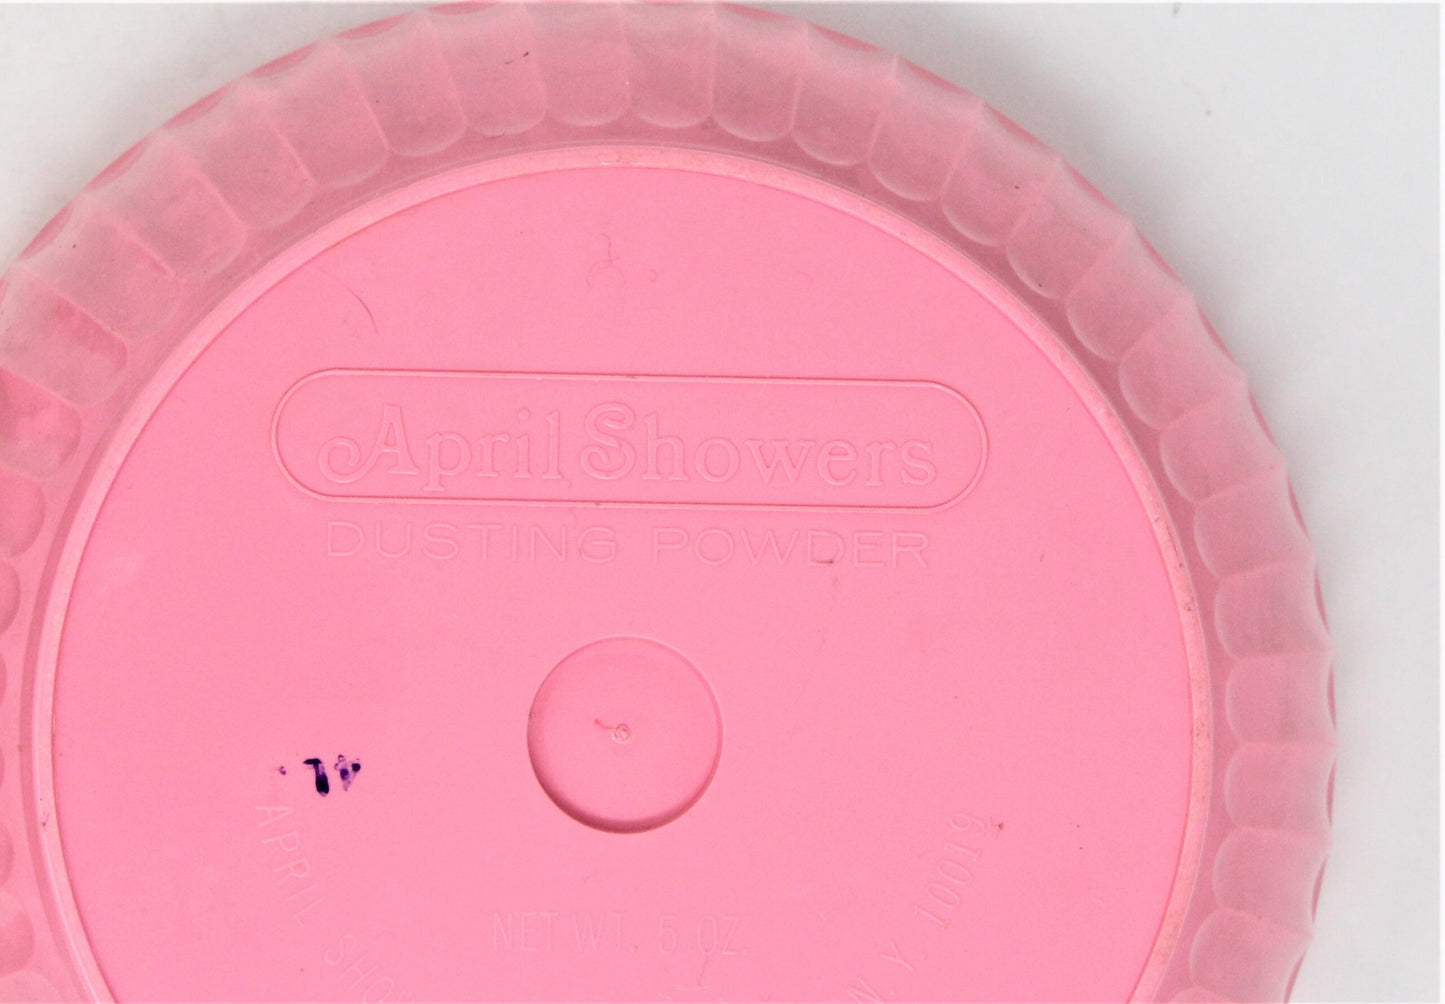 Dusting Powder Box, Cheramy, April Showers, Pink Plastic, Vintage